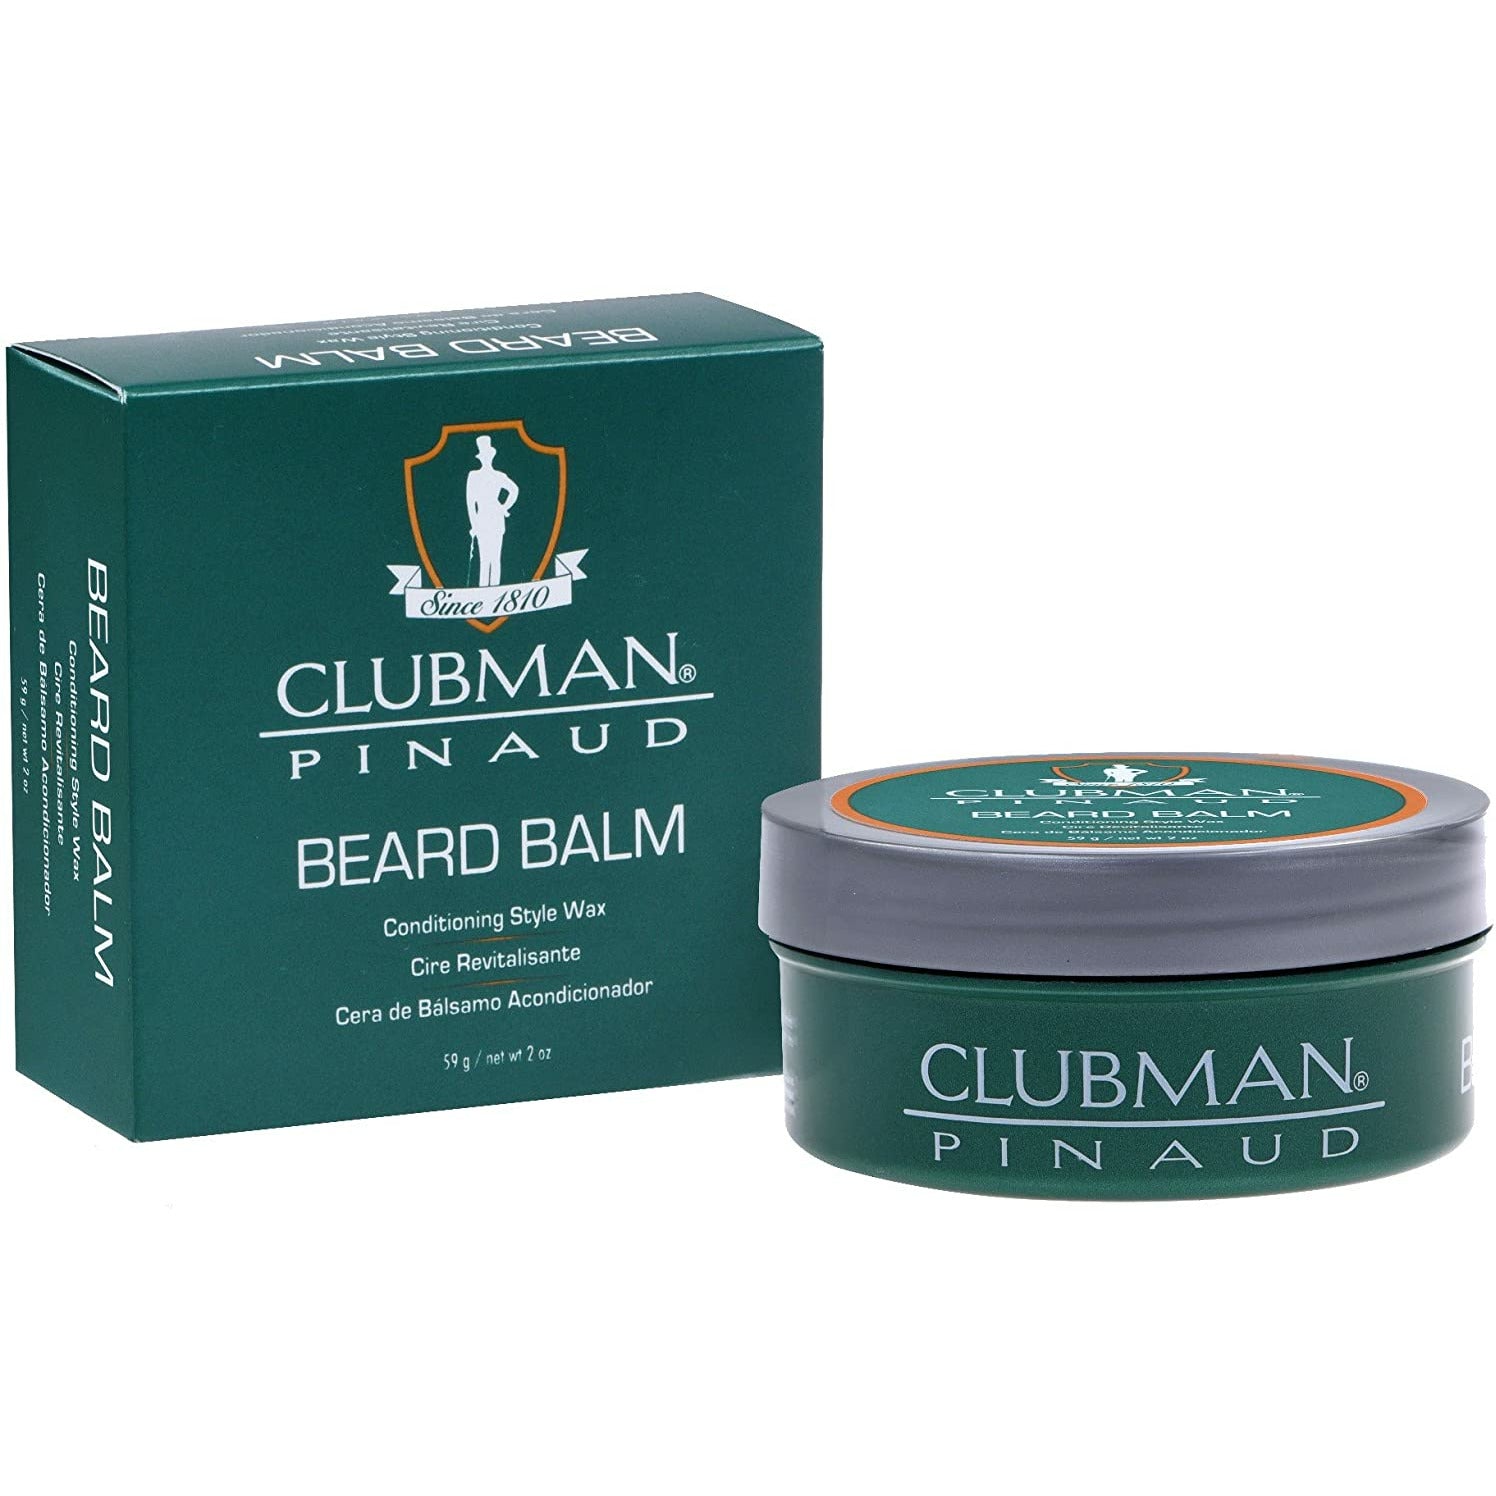 CLUBMAN PINAUD BEARD BALM 2oz-Pinaud- Hive Beauty Supply